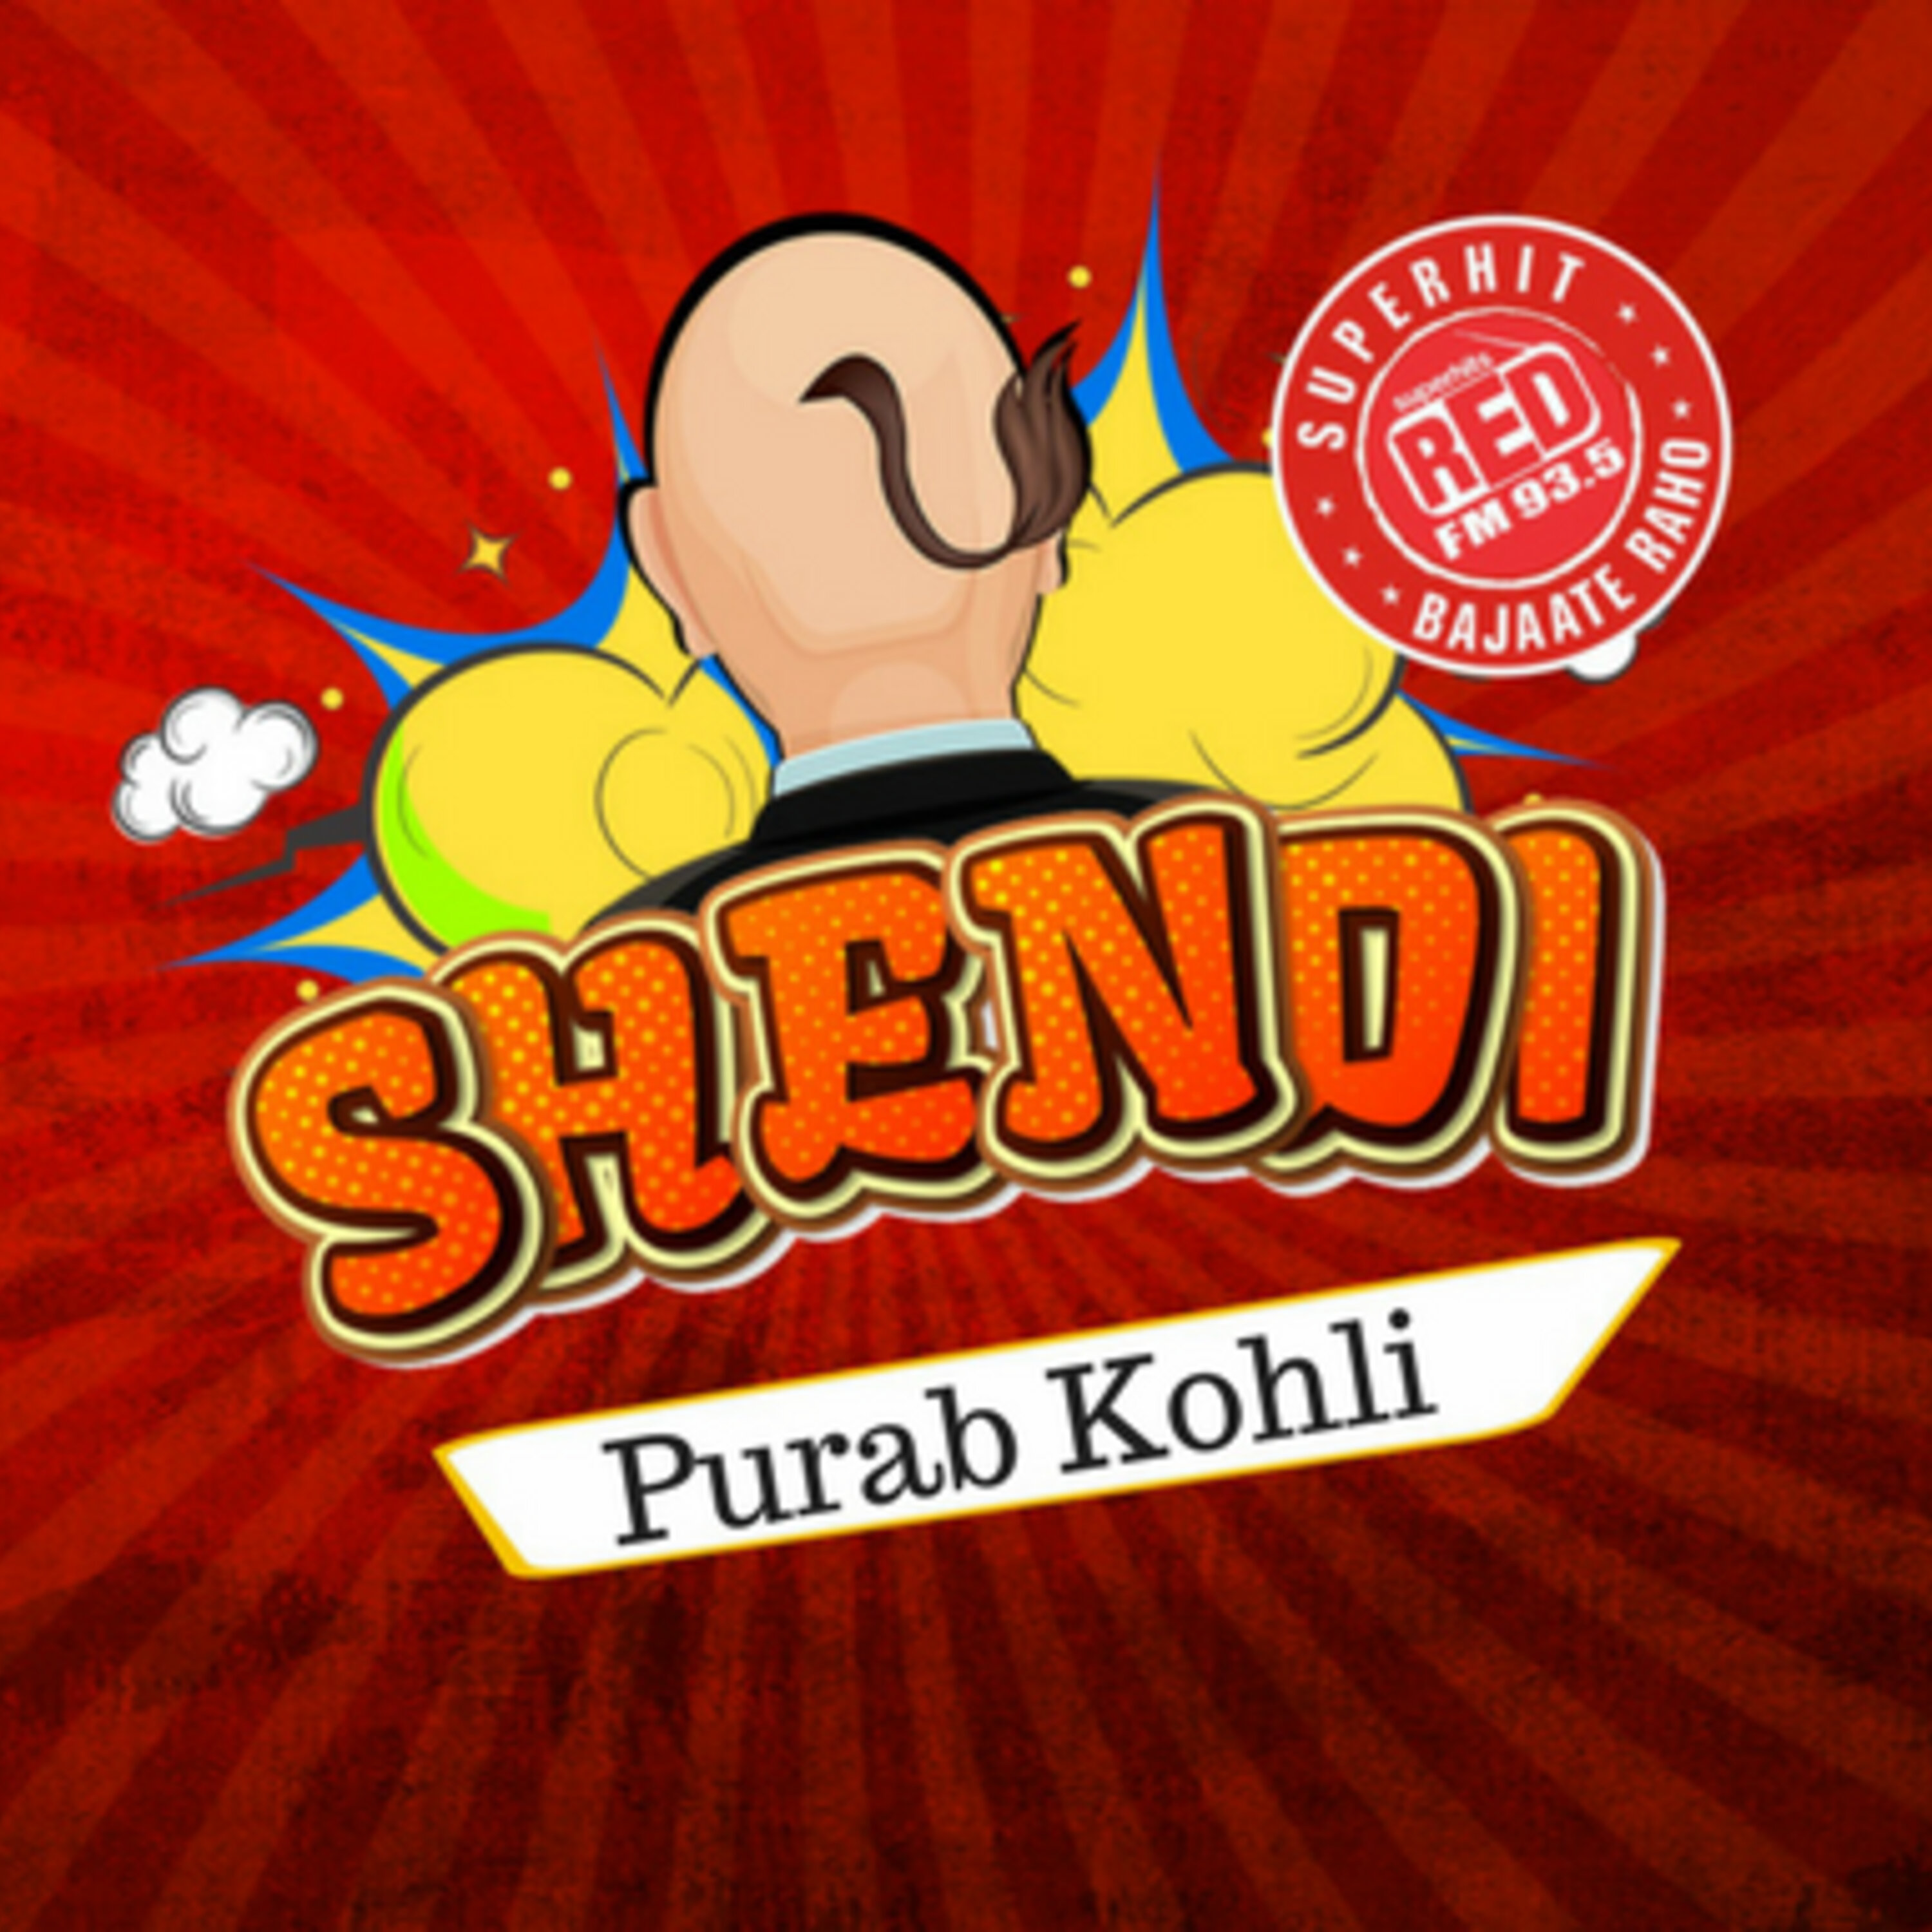 Red FM Shendi- Purab Kohli